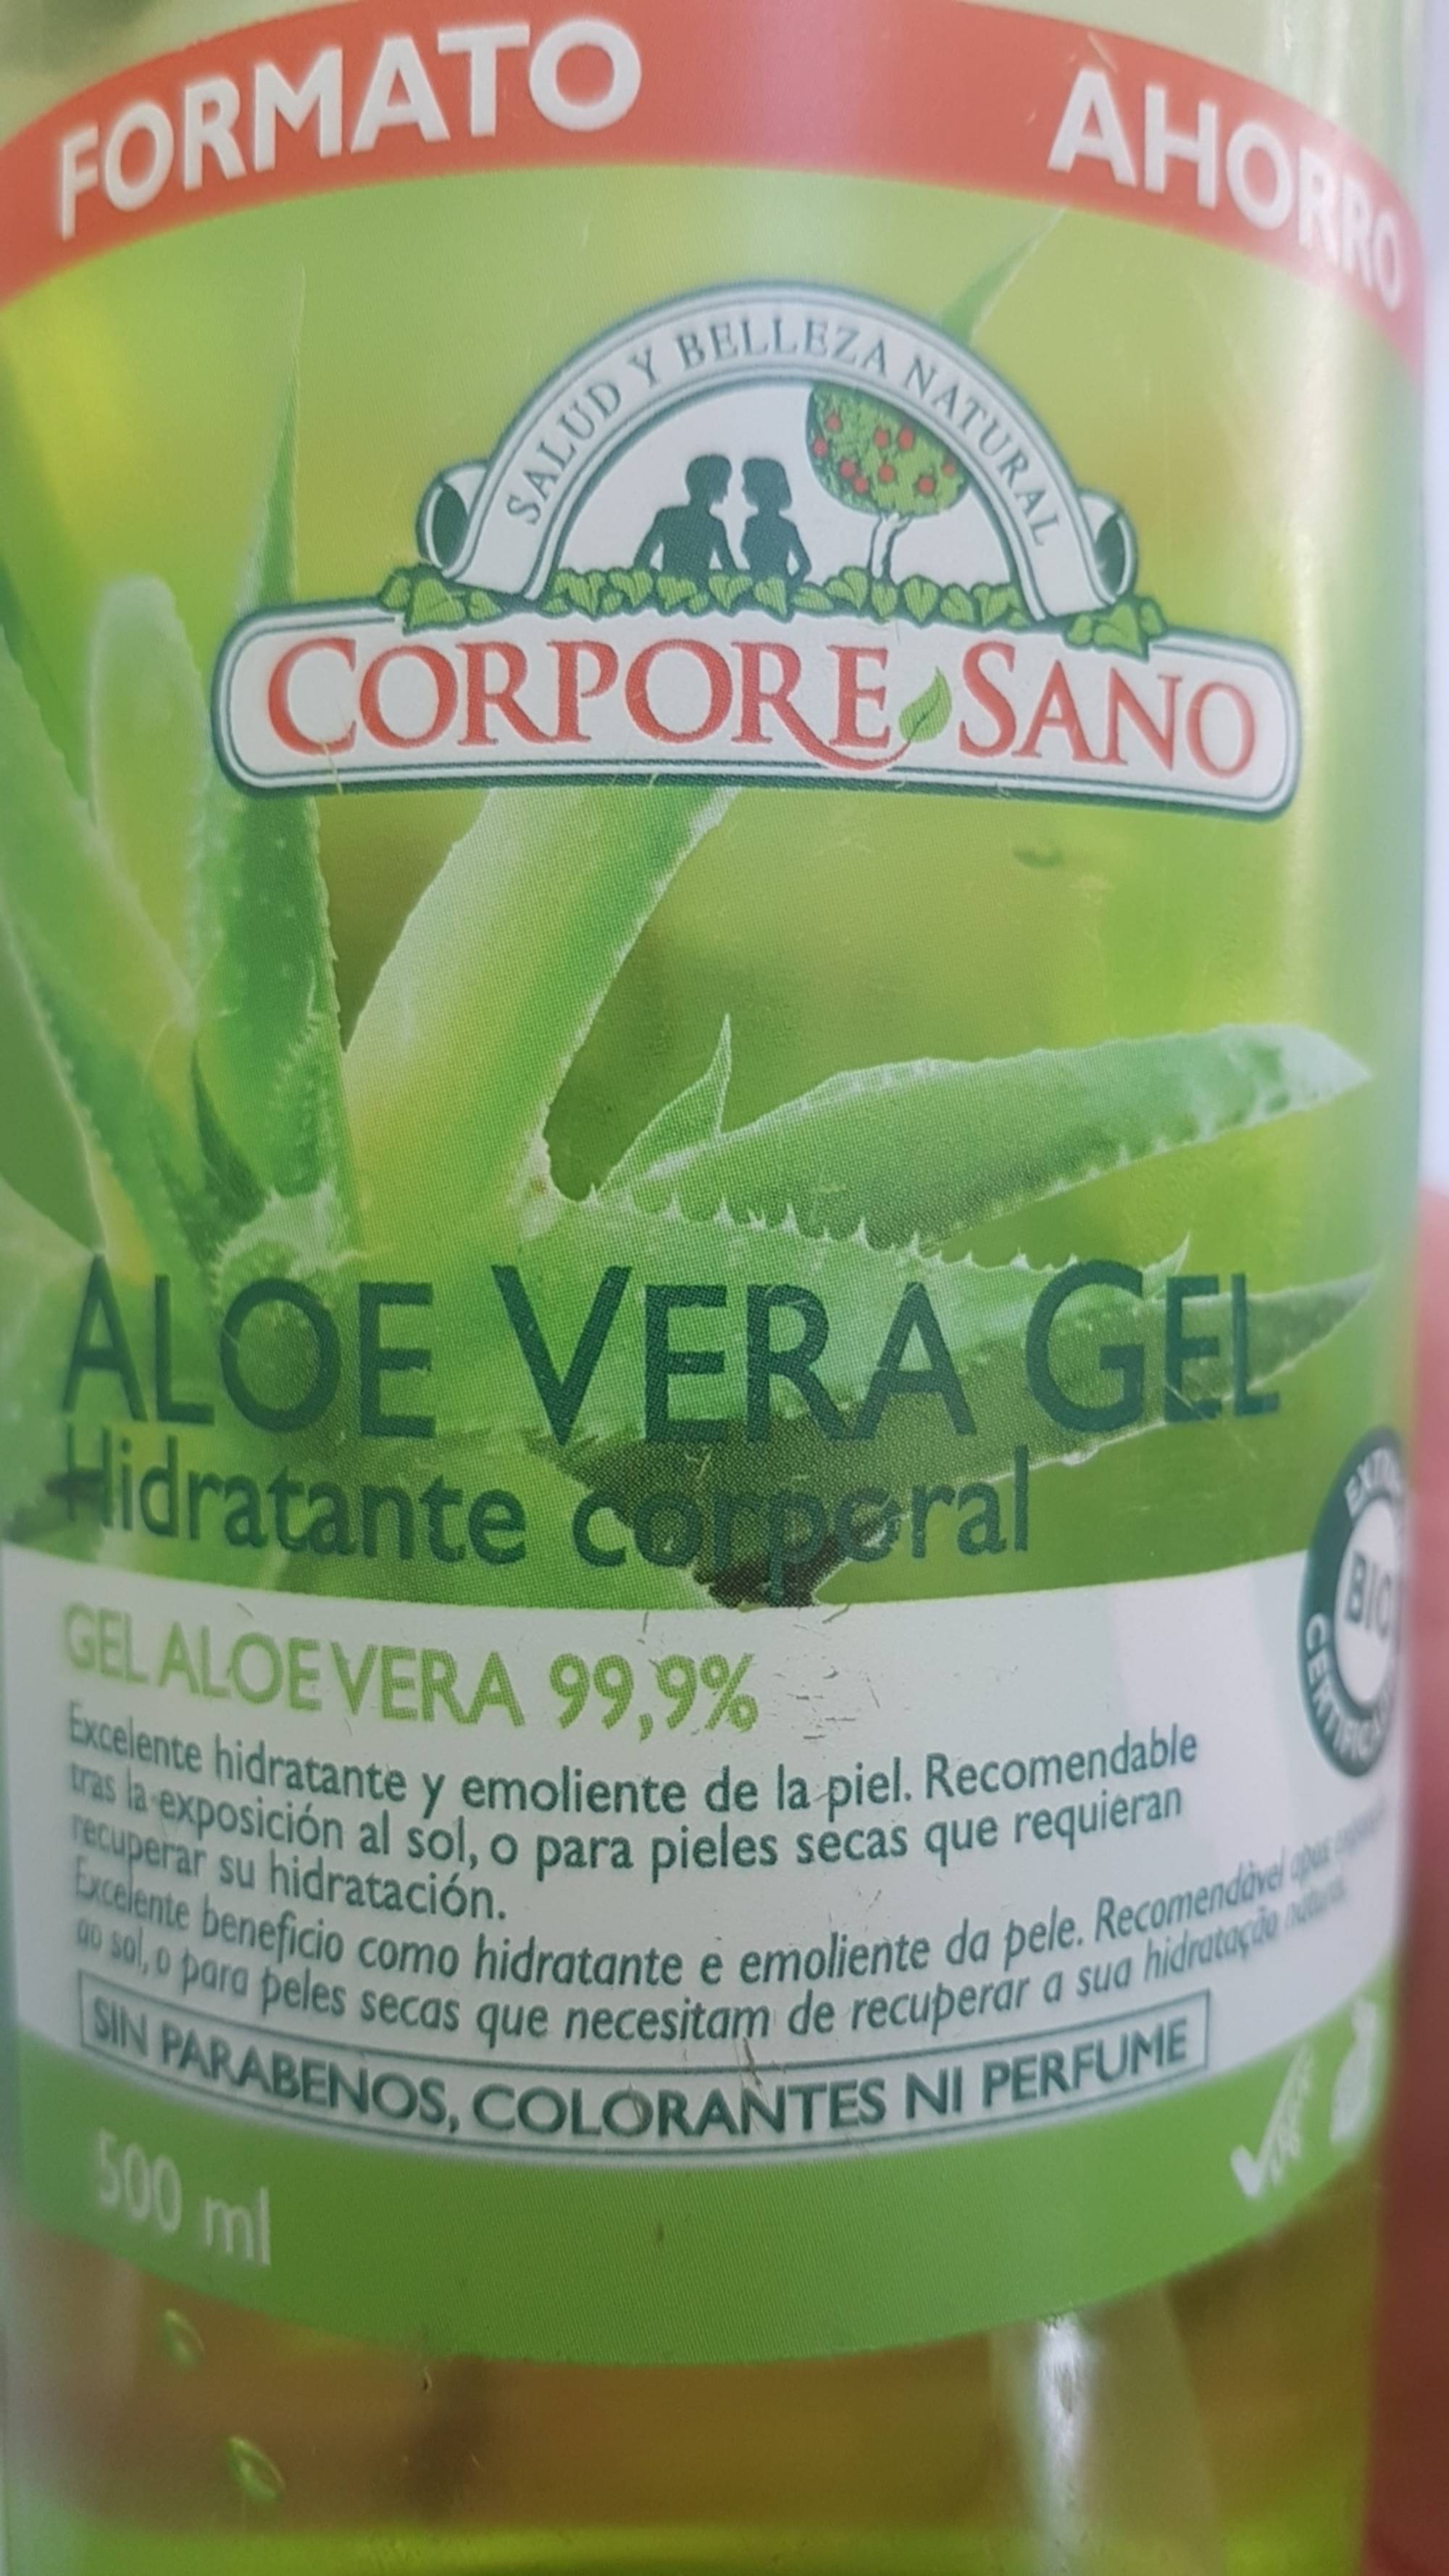 CORPORE SANO - Aloe vera gel 99,9%